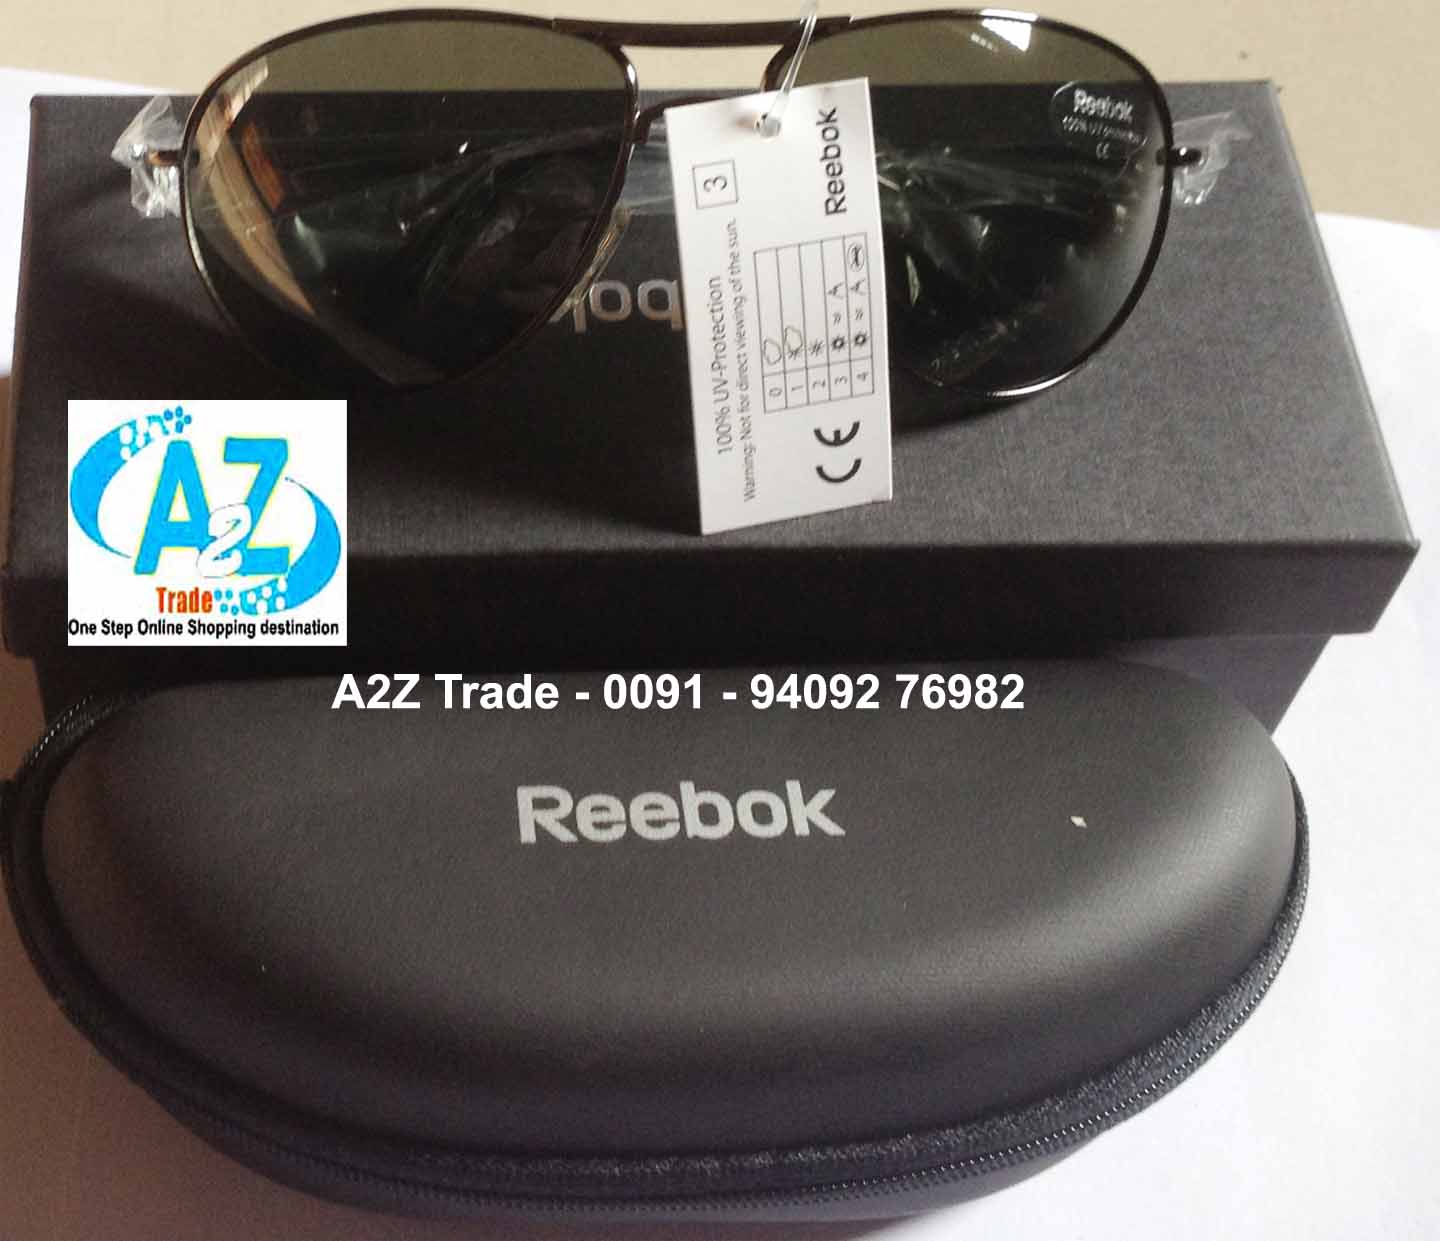 Reebok Aviator Premium Sunglasses Model 